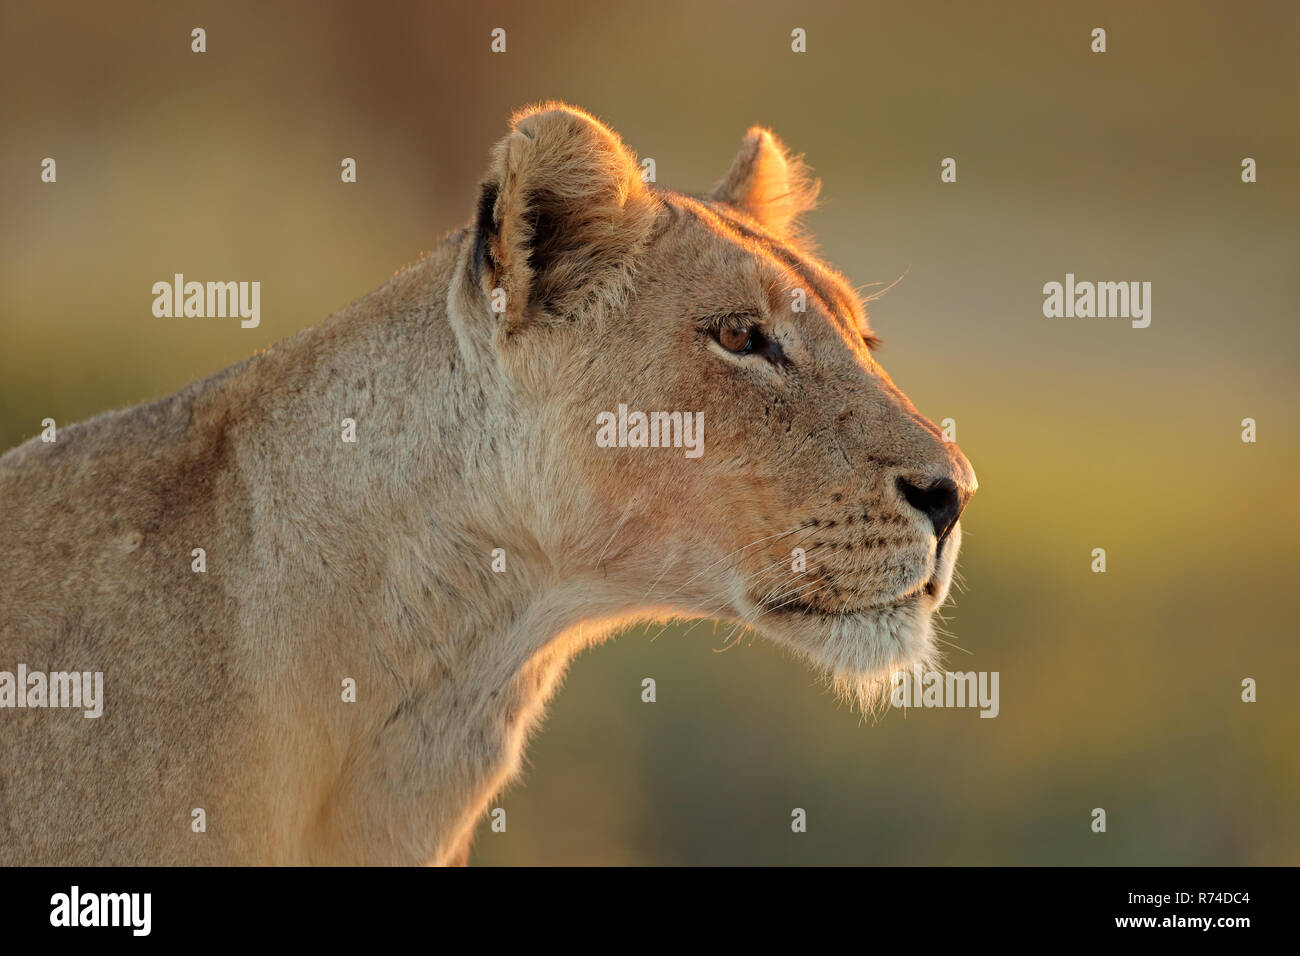 African lioness portrait Stock Photo